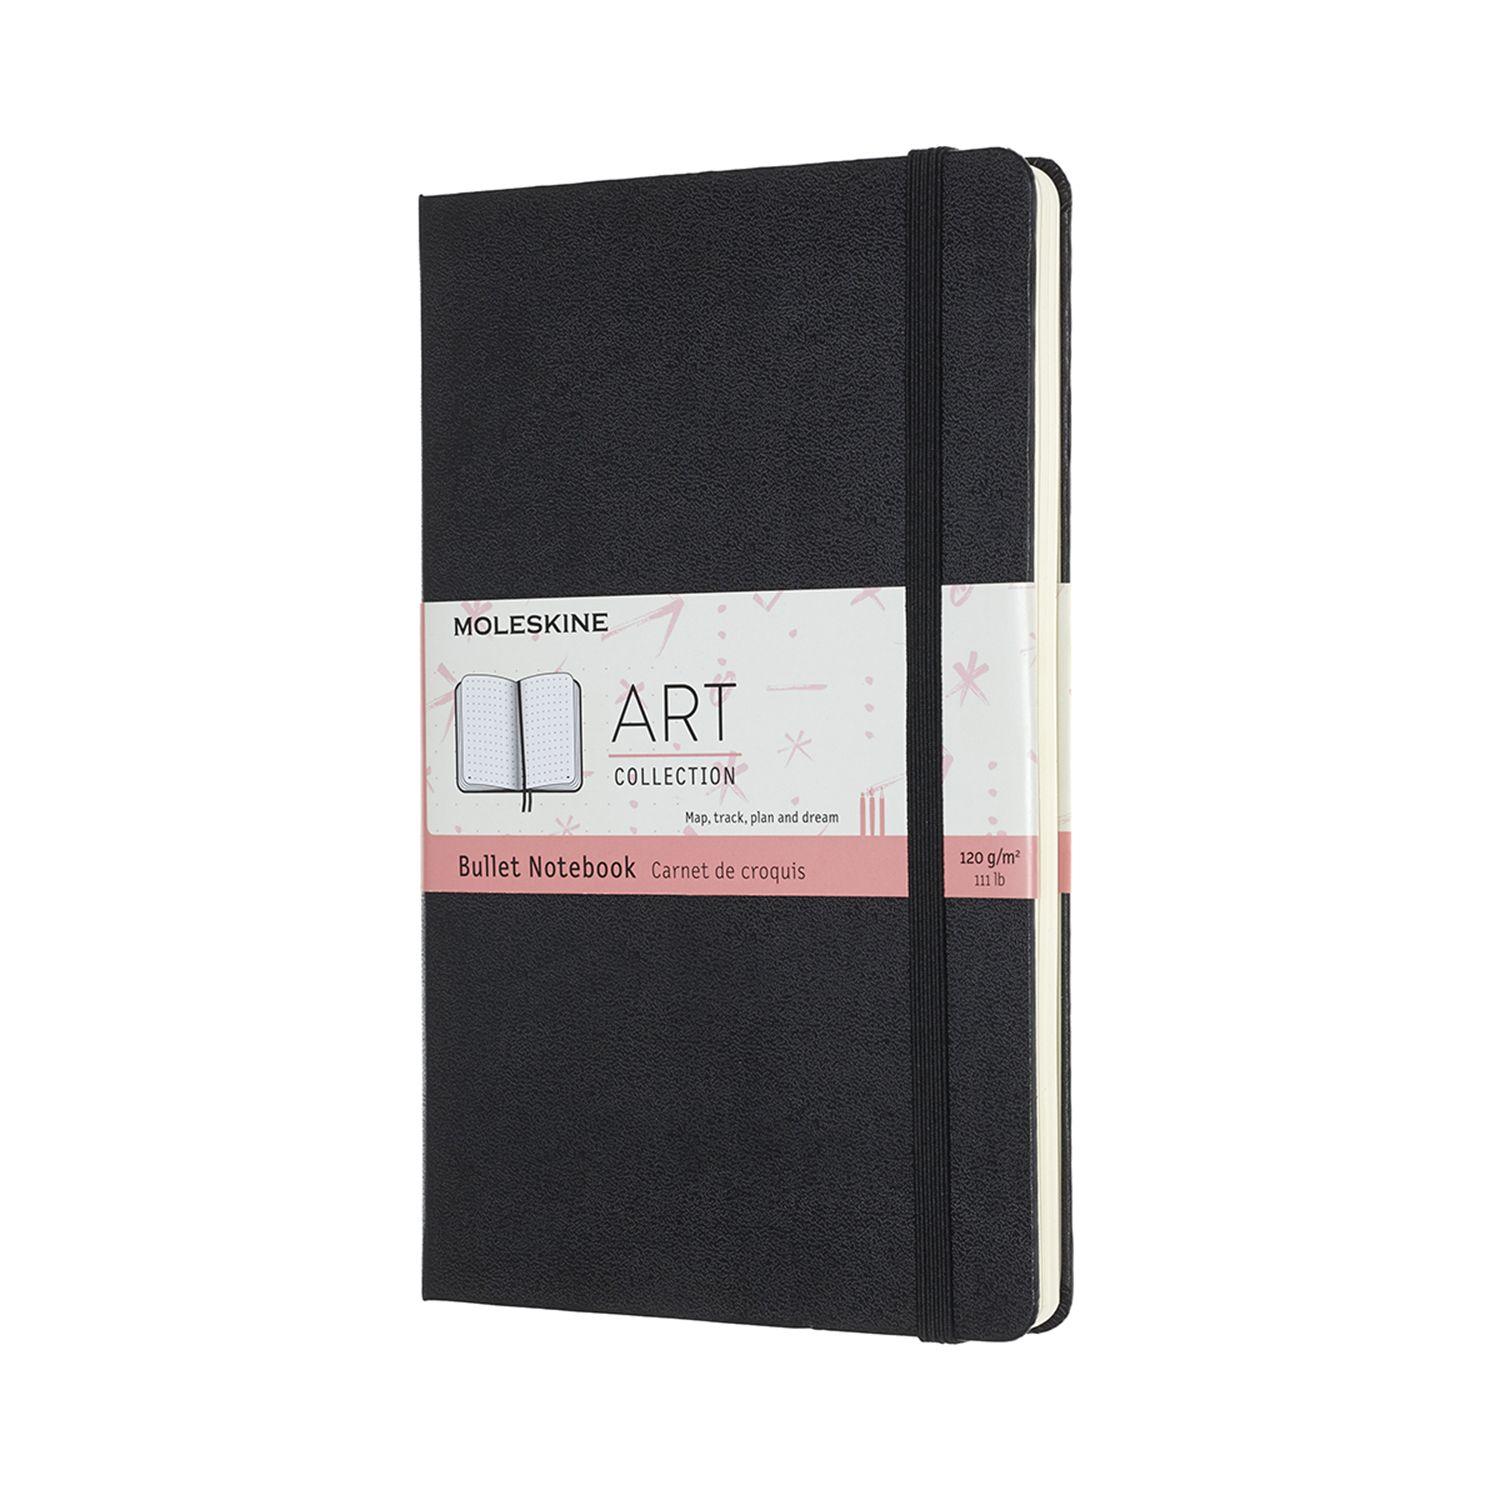 Moleskine Art Bullet Notebook Large, Black